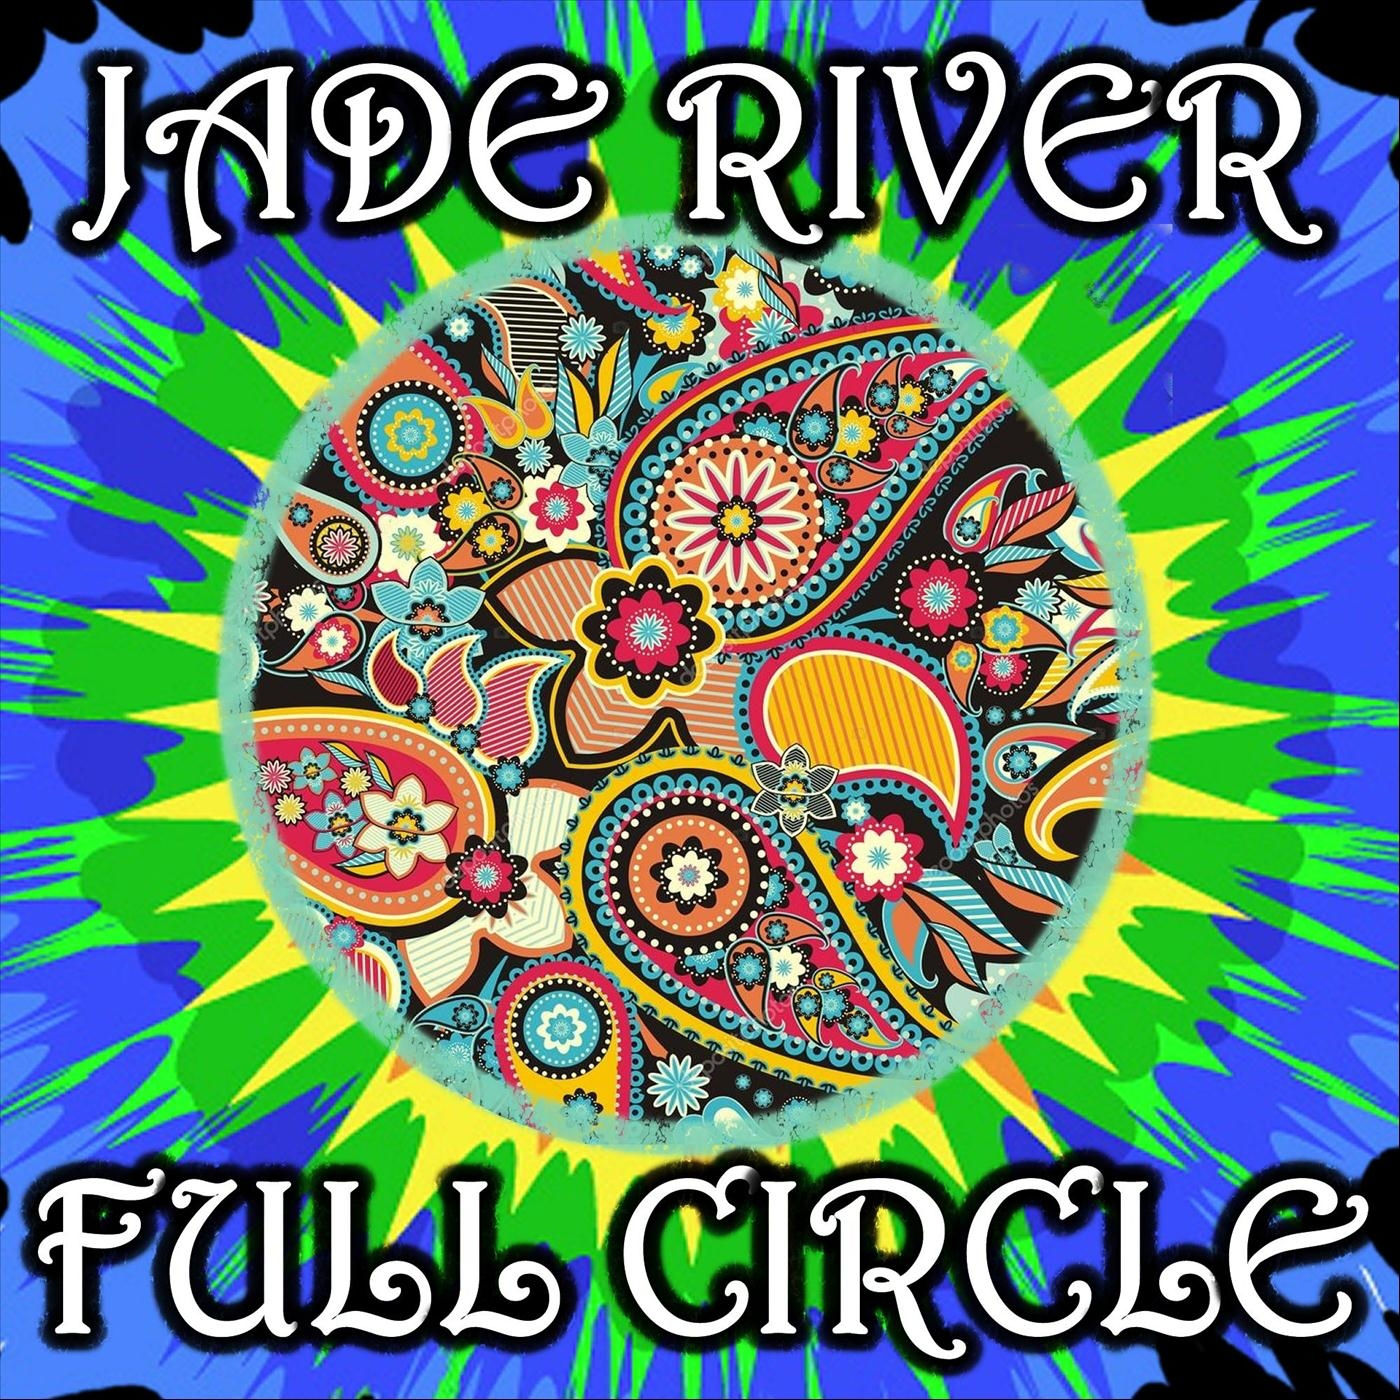 Full Circle EP